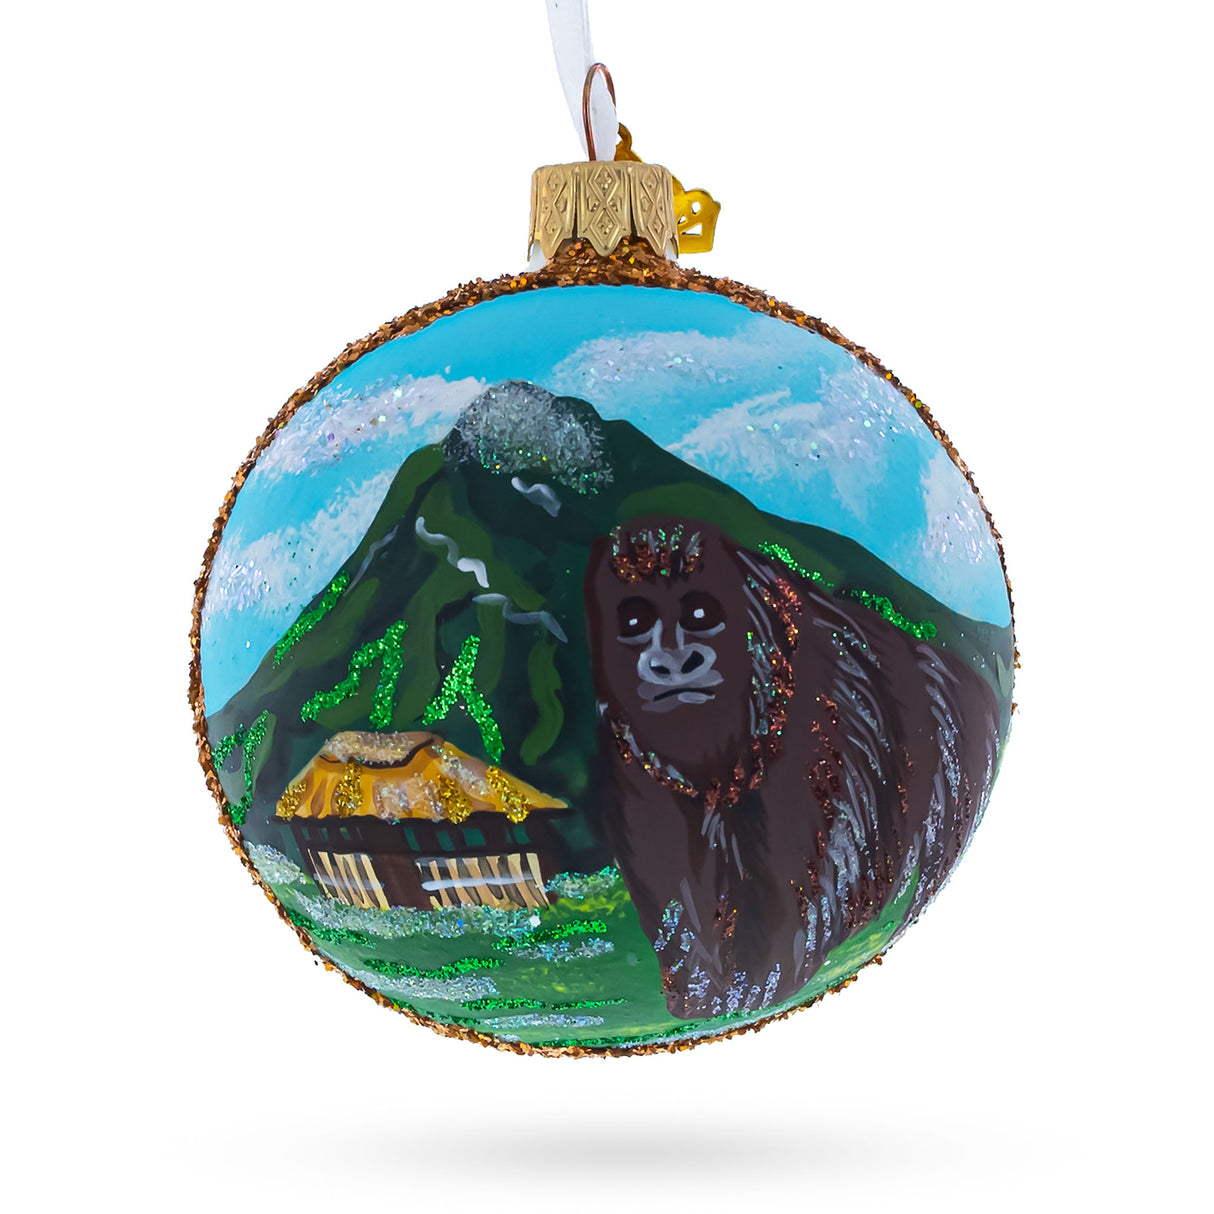 Virunga National Park, Congo Glass Ball Christmas Ornament in Multi color, Round shape